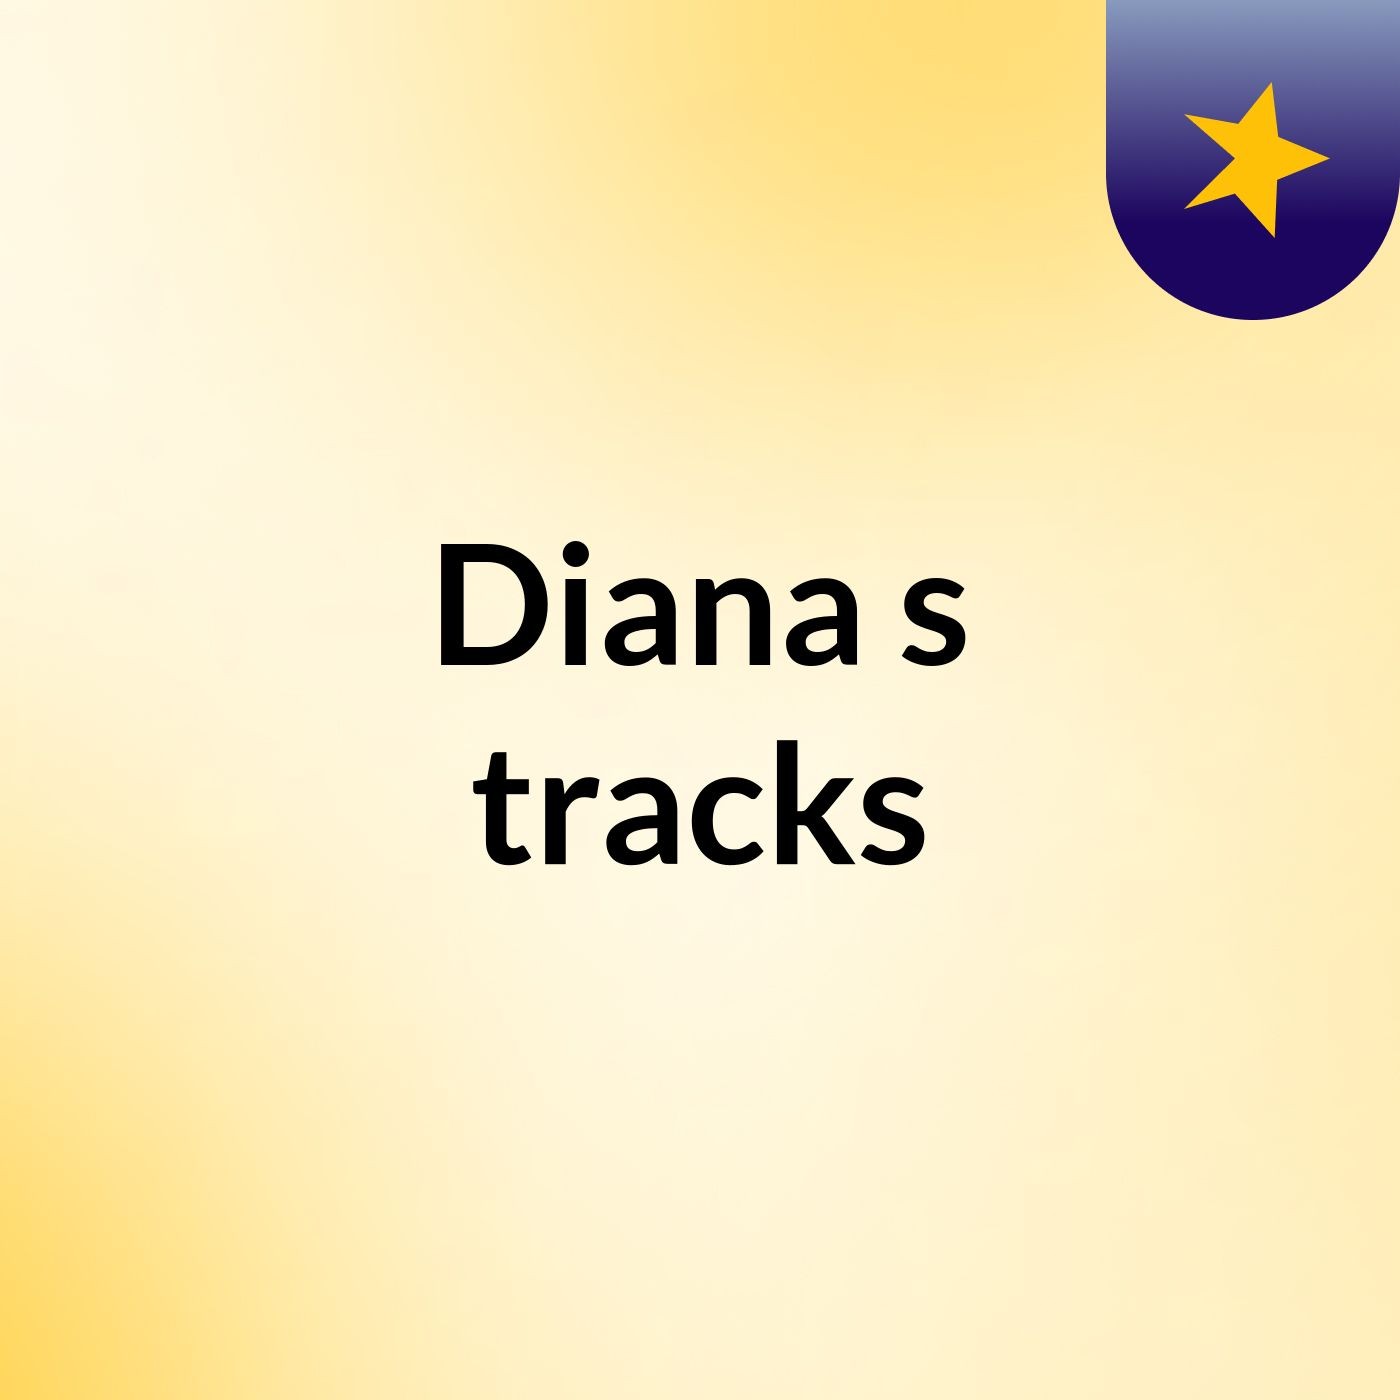 Diana's tracks